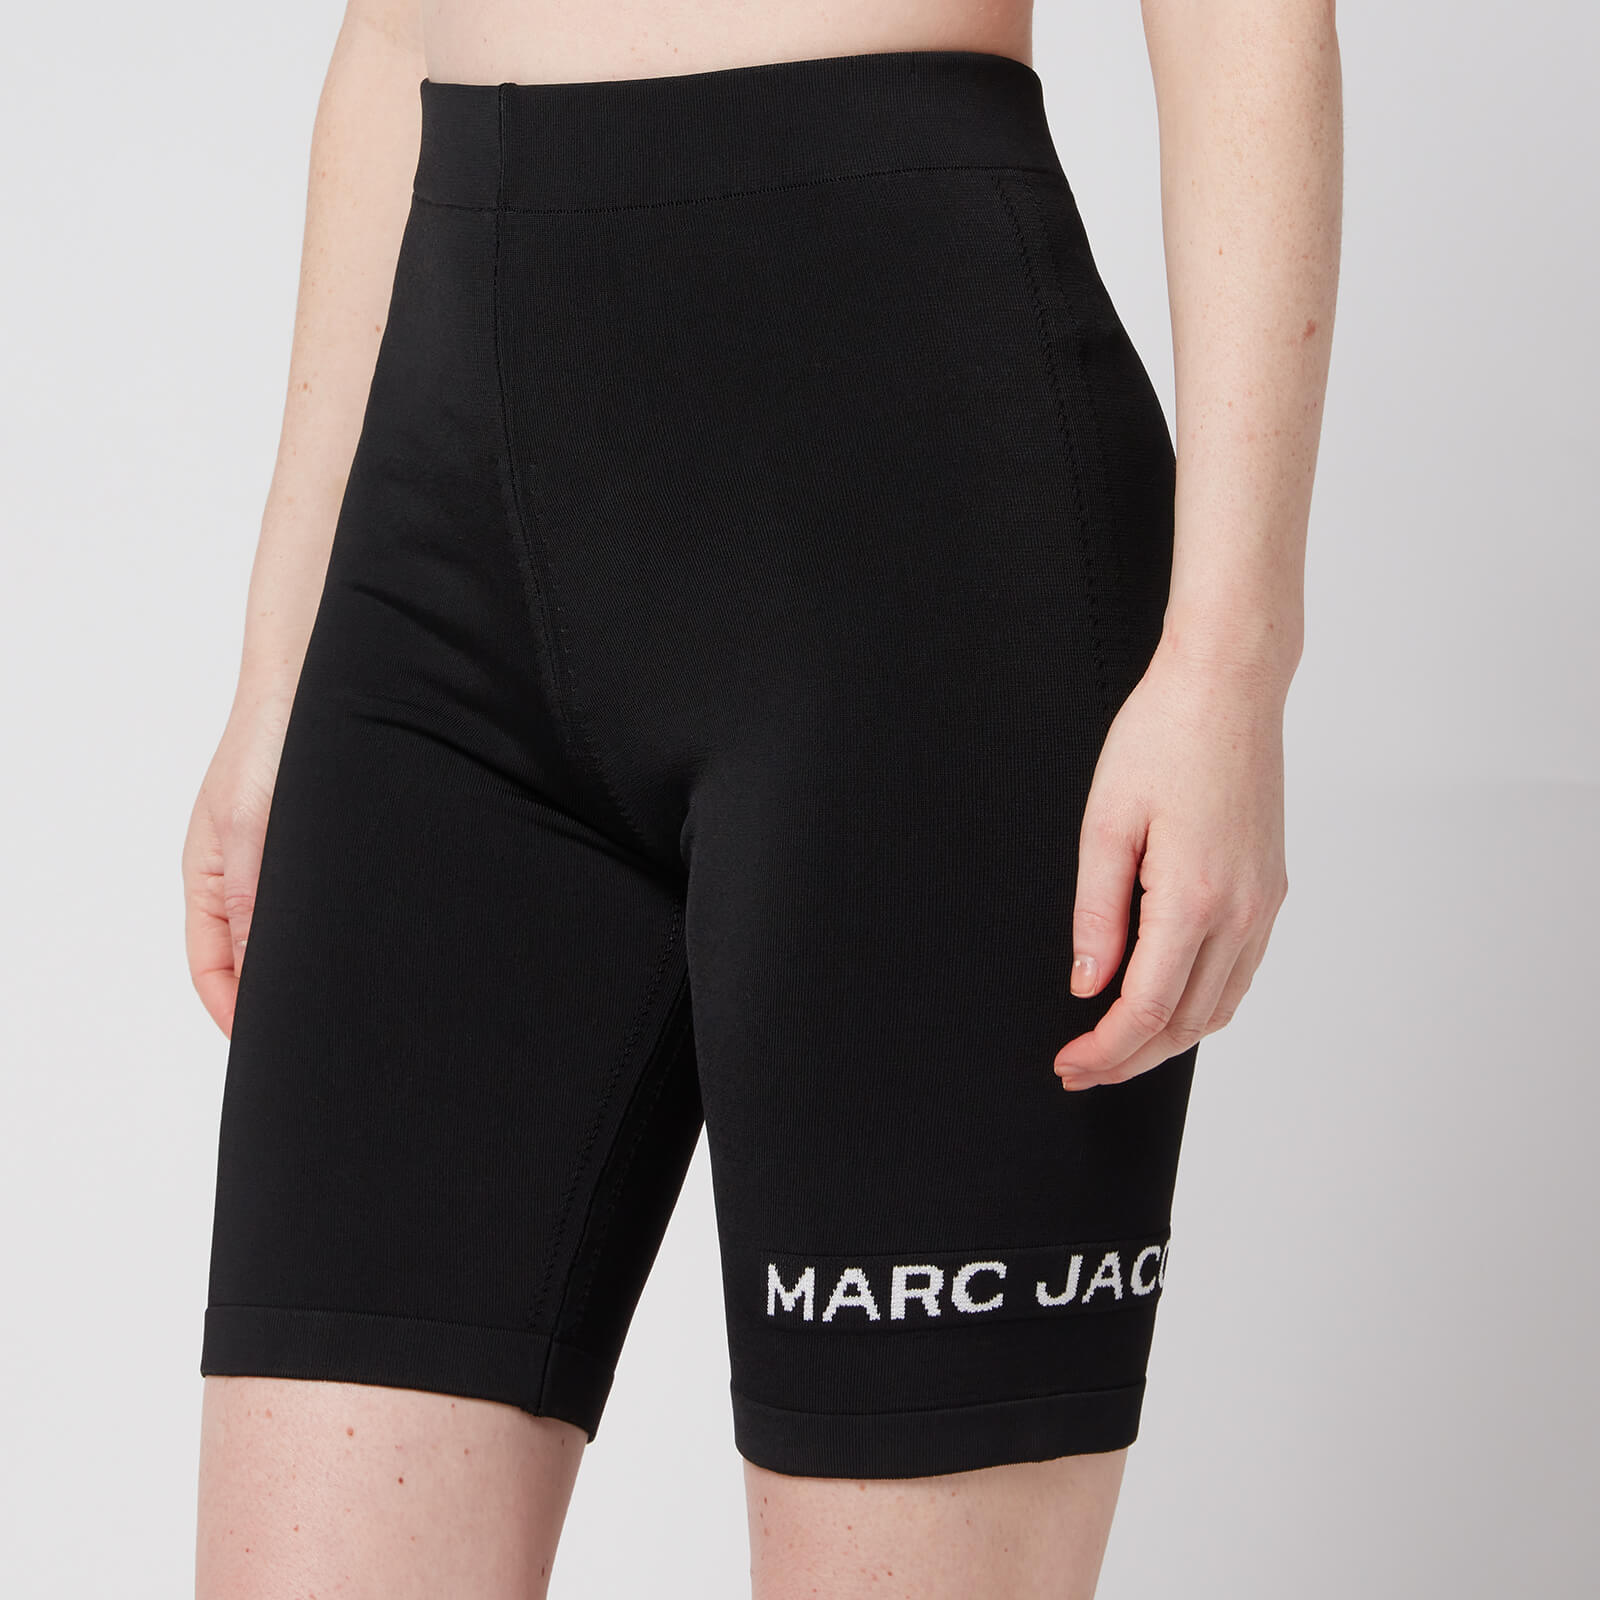 Marc Jacobs Women's The Sport Shorts - Black - XS